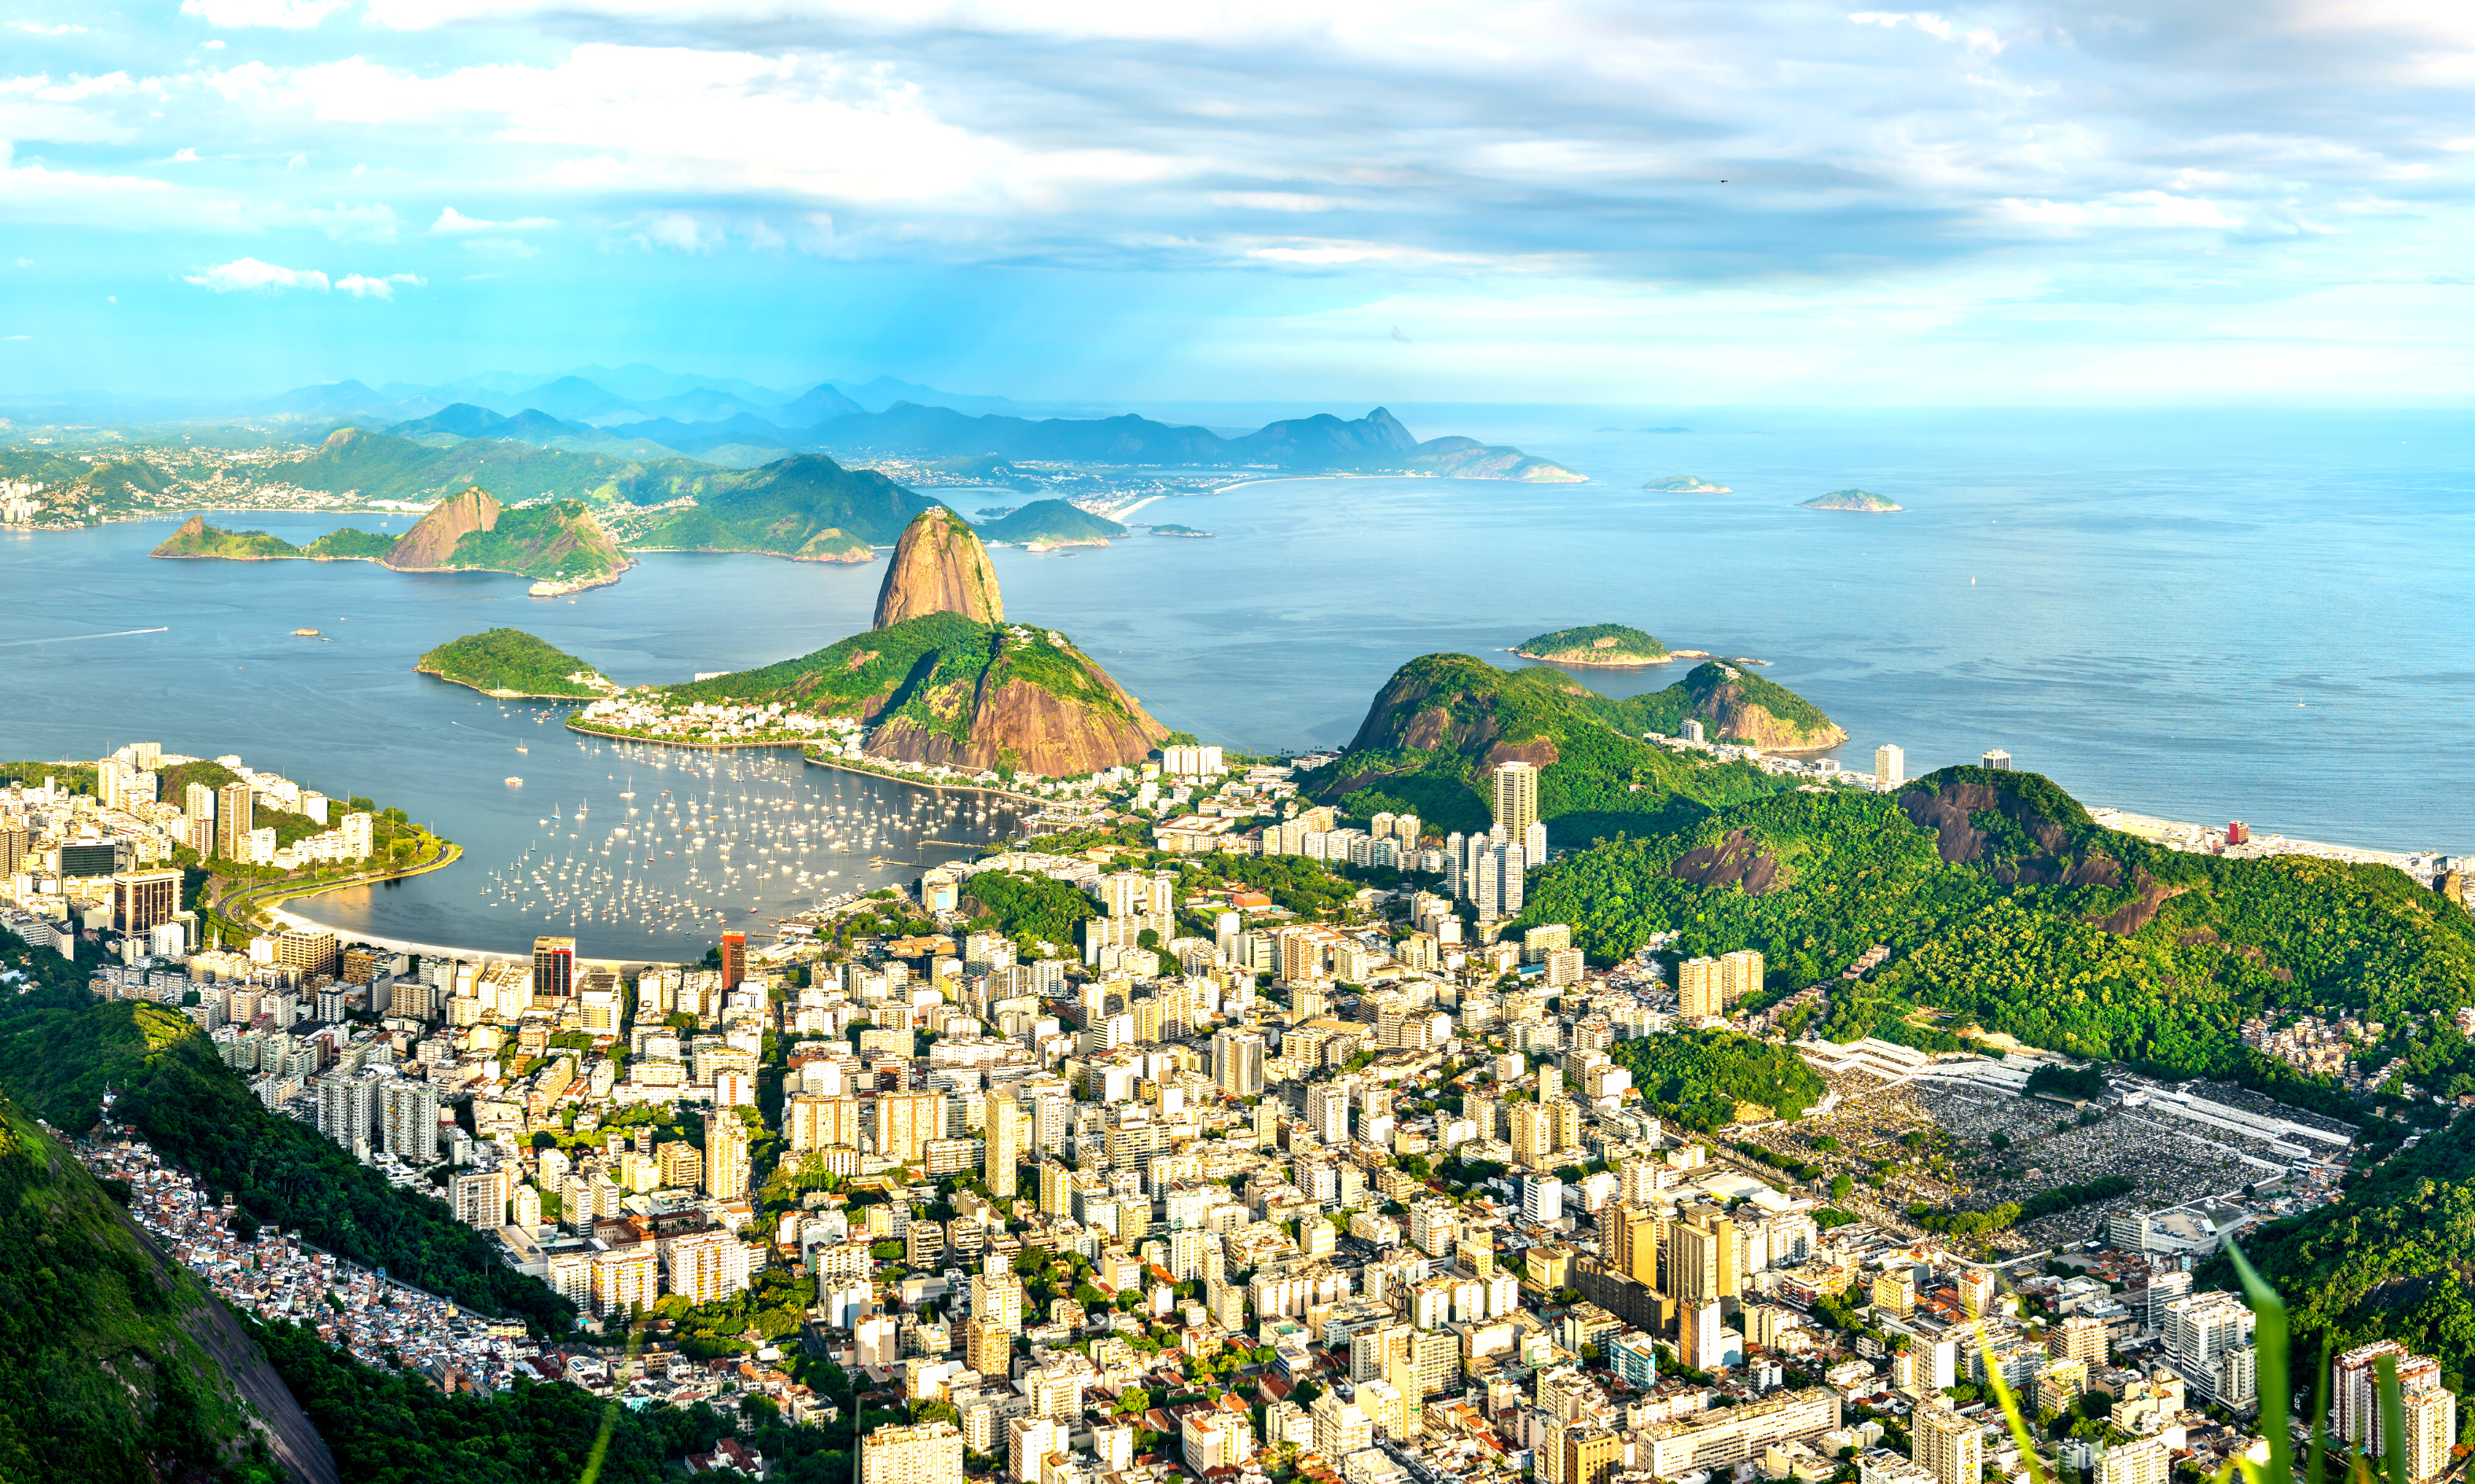 Nossa Senhora de Lourdes operates in the north and central areas of Rio de Janeiro, Brazil, where it serves 1.3 million passengers annually.